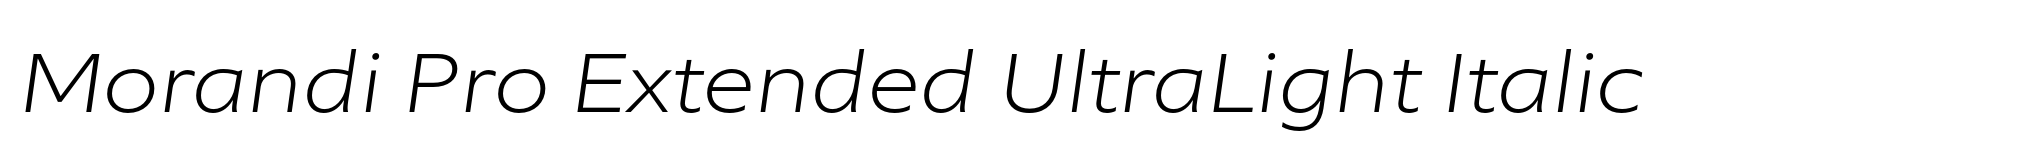 Morandi Pro Extended UltraLight Italic image